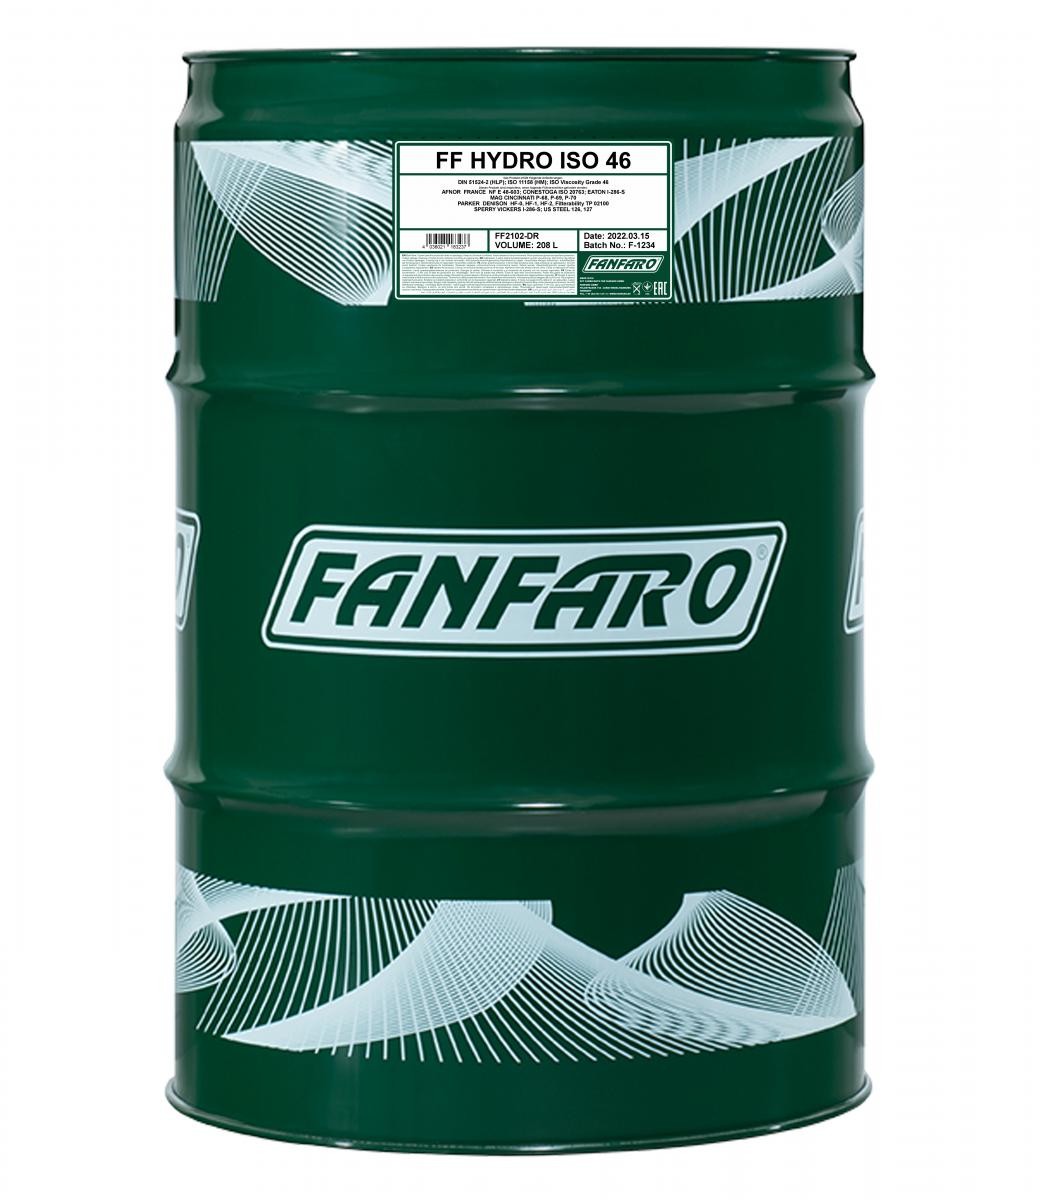 FANFARO Hydro, ISO 46 Capacity: 208l DIN 51524-2 HLP, ISO 11158 HM, ISO VG 46 Hydraulic fluid FF2102-DR buy